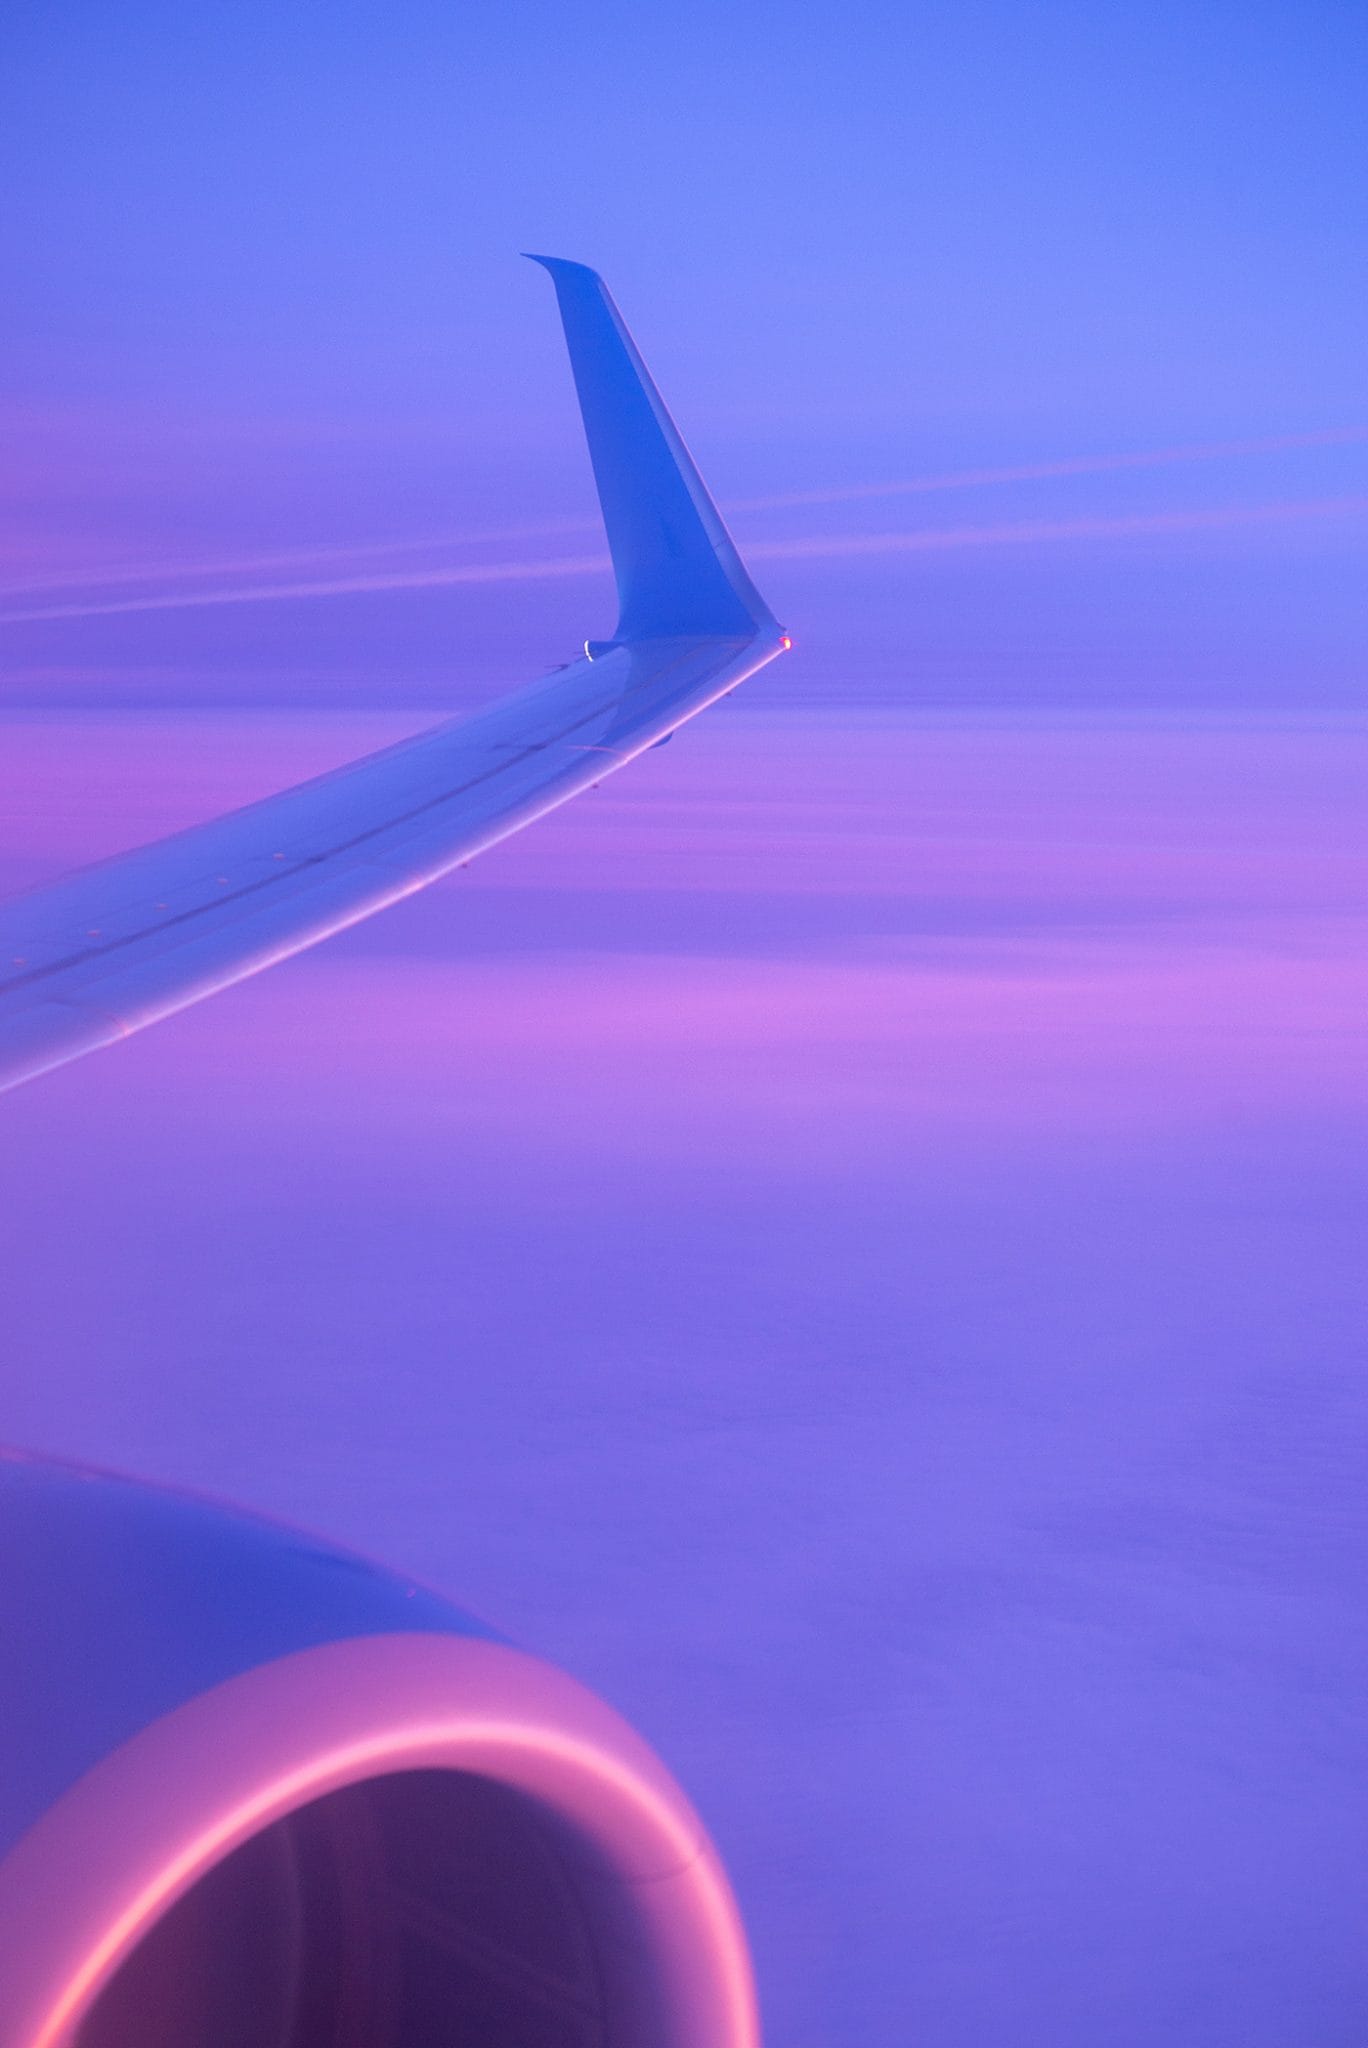 Wing Of Plane Flying In Twilight Mist